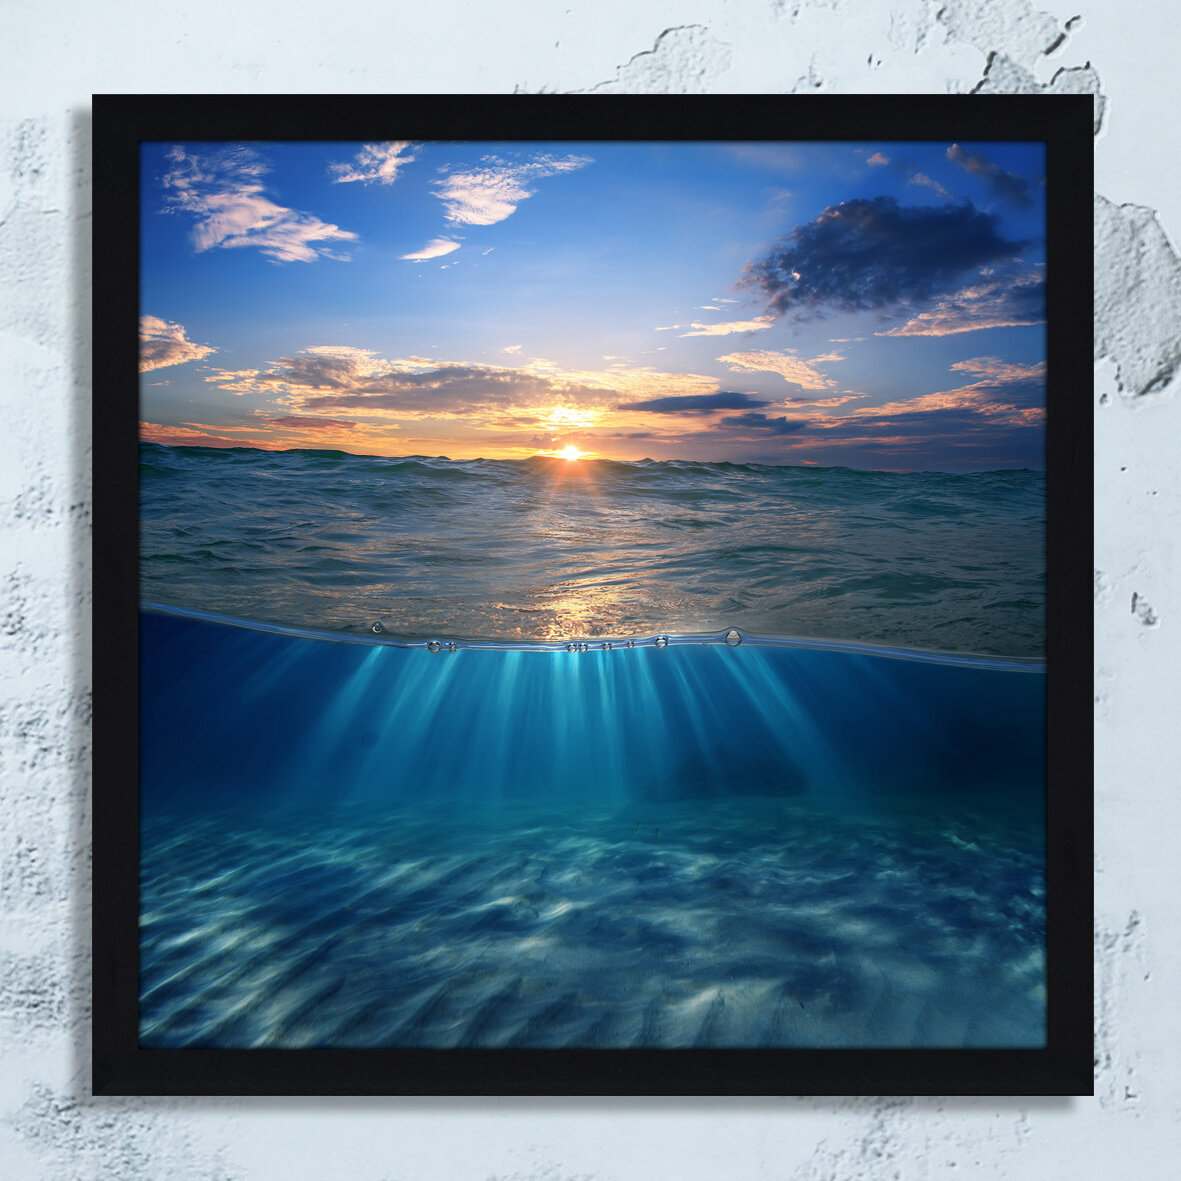 Picture Perfect InternationalUnderwater Framed Plexiglass Wall Art Set of 3 